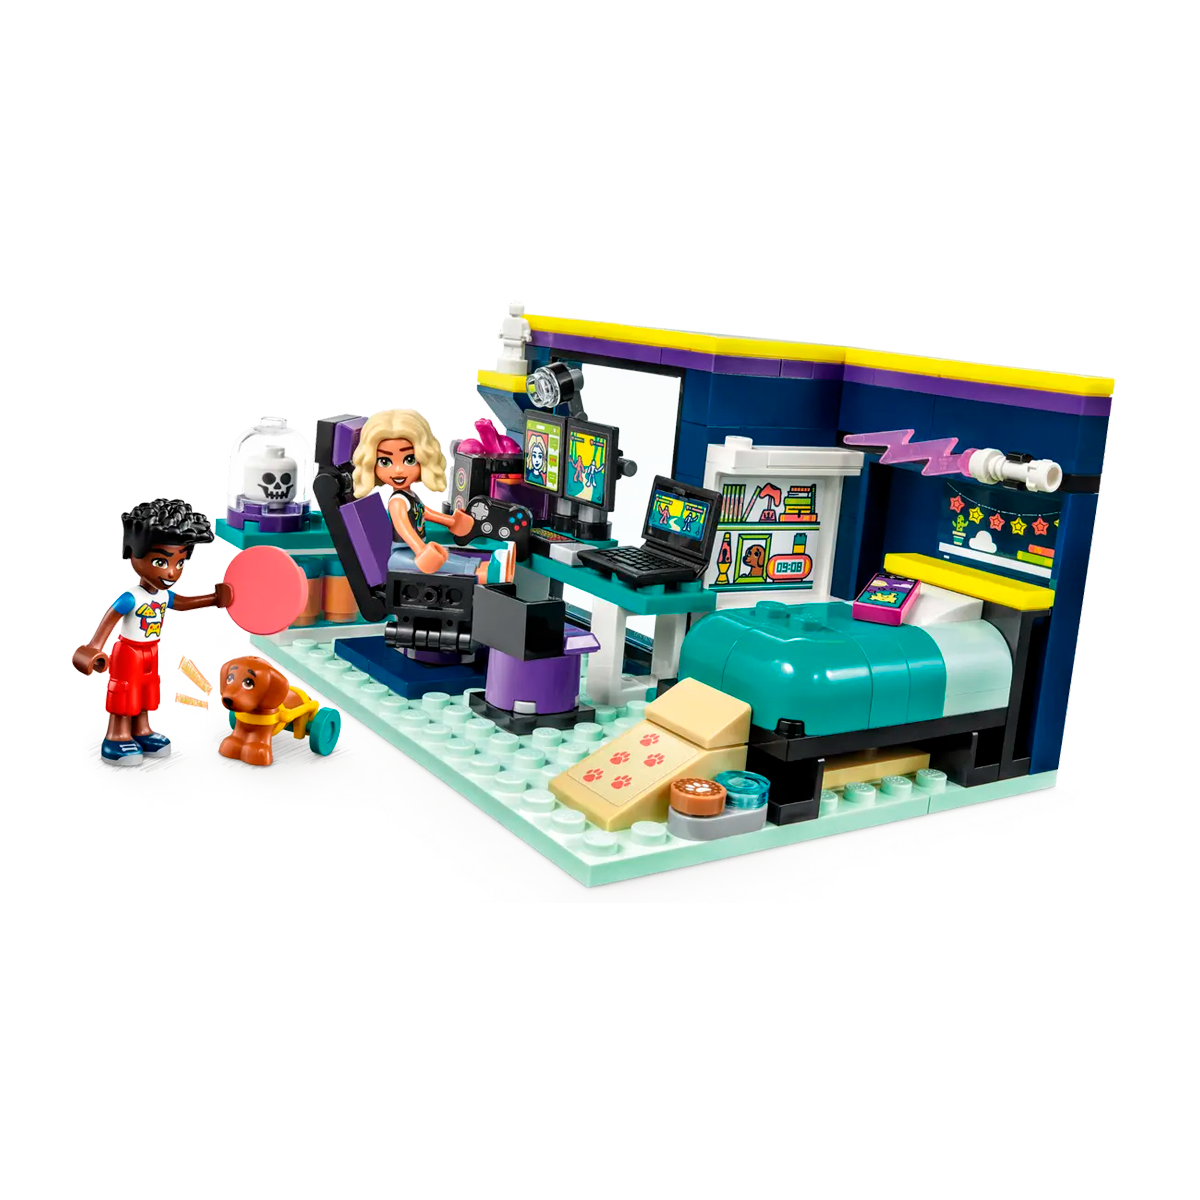 Lego Friends Habitación de Nova